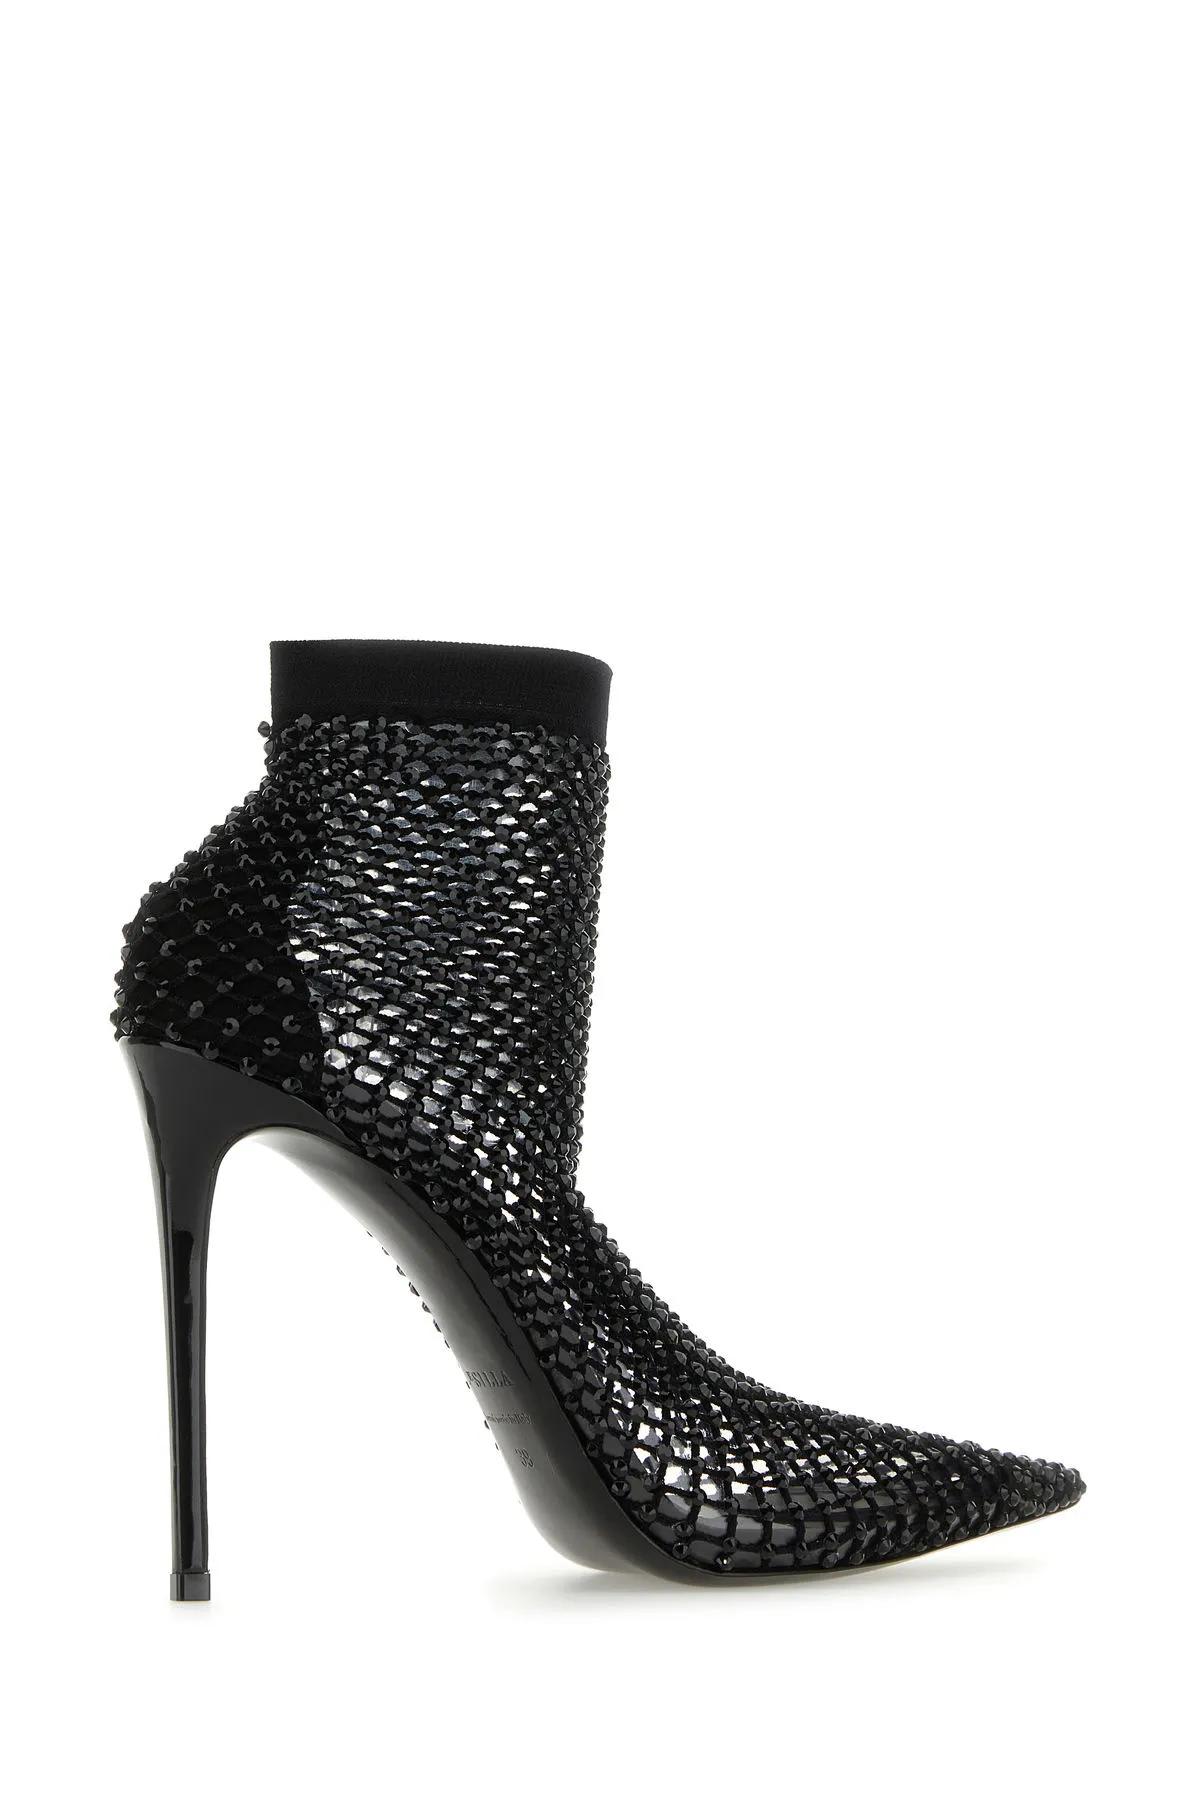 Shop Le Silla Black Mesh Gilda Ankle Boots